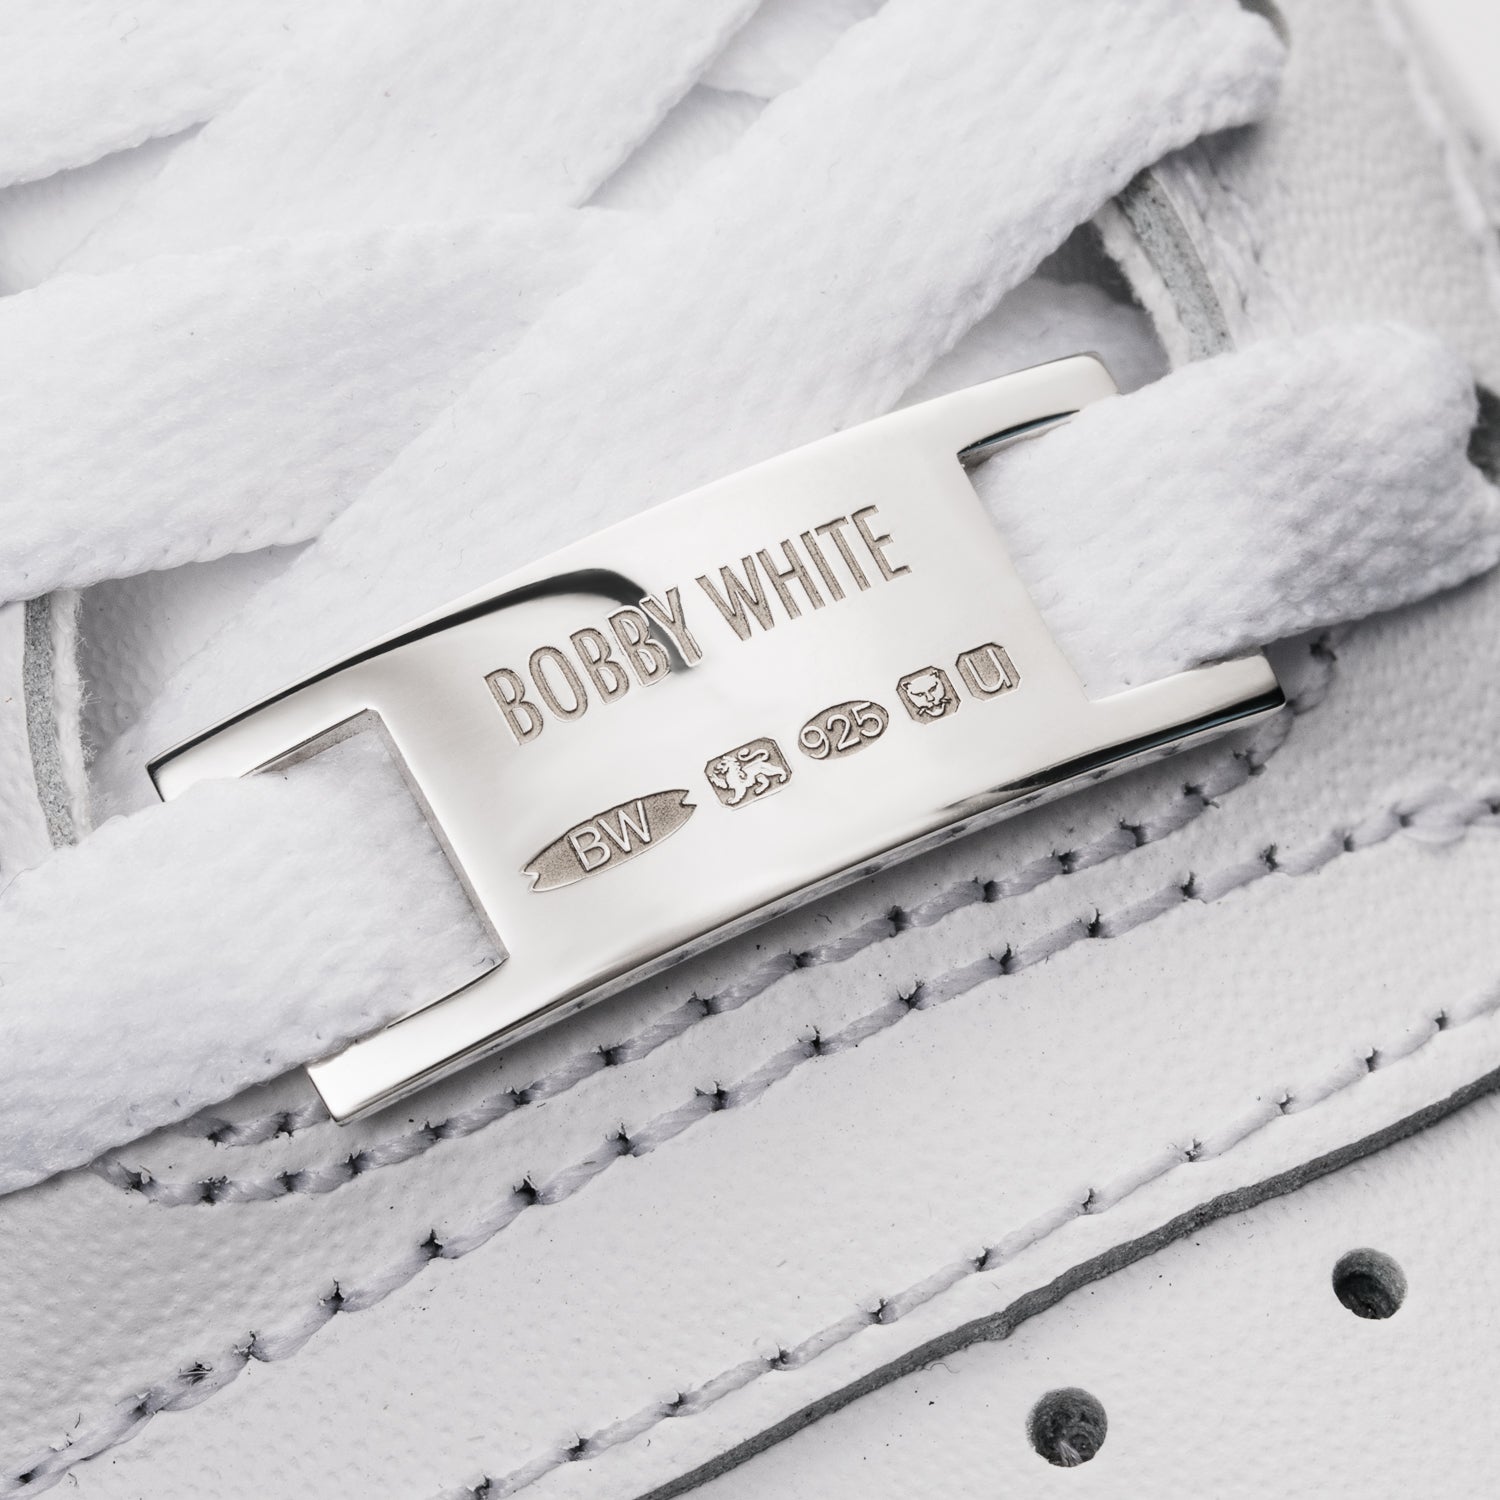 Bobby White Silver Lace Locks